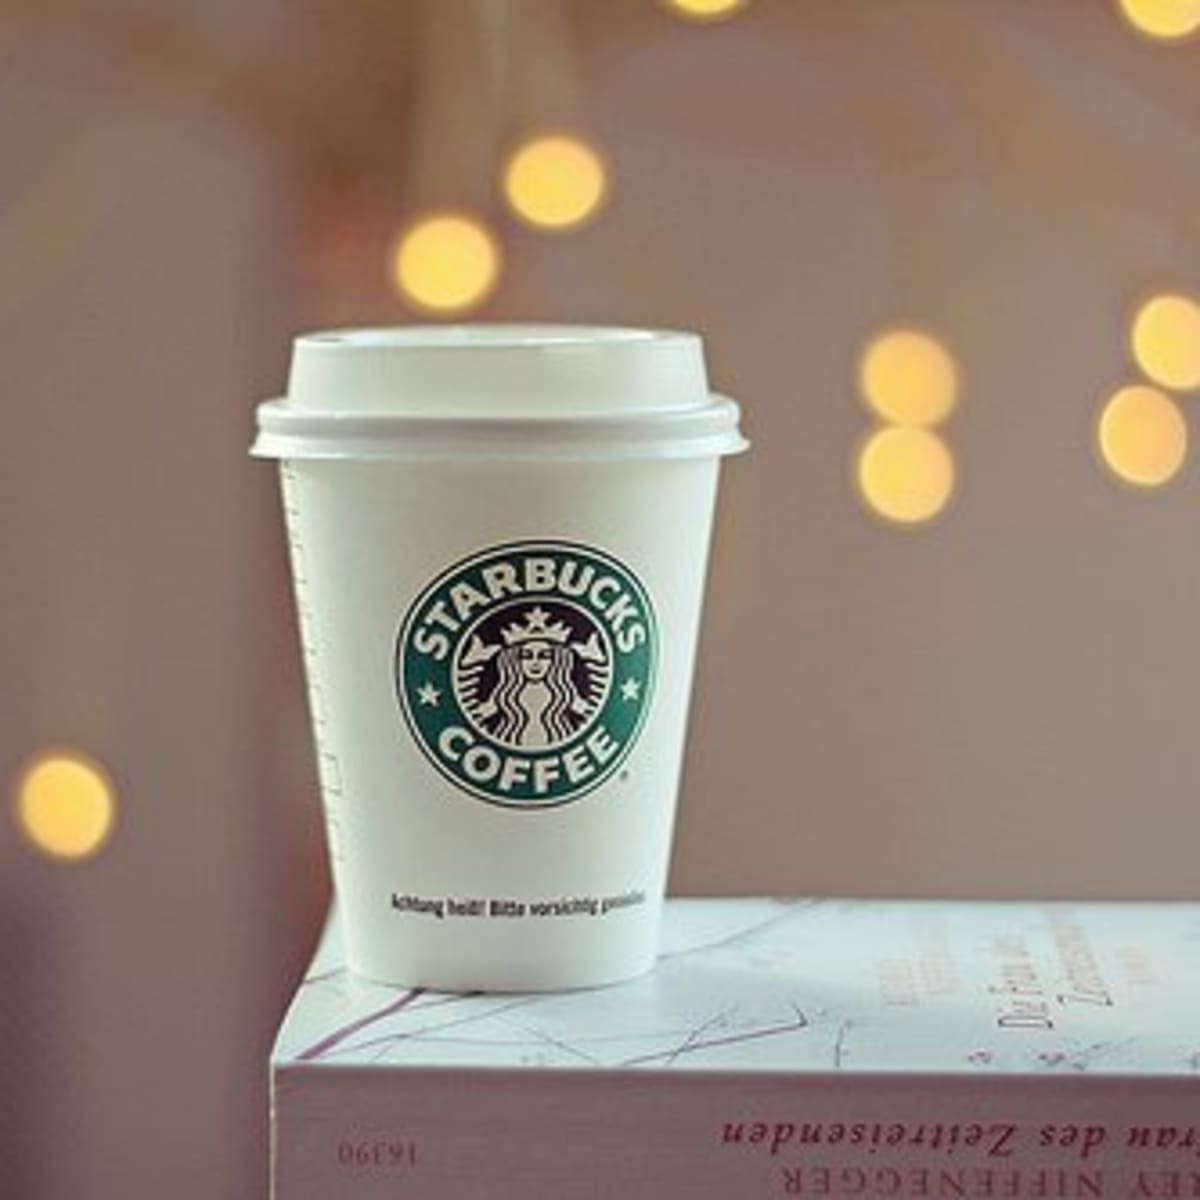 Starbucks Drink Guide: Lattes - Delishably